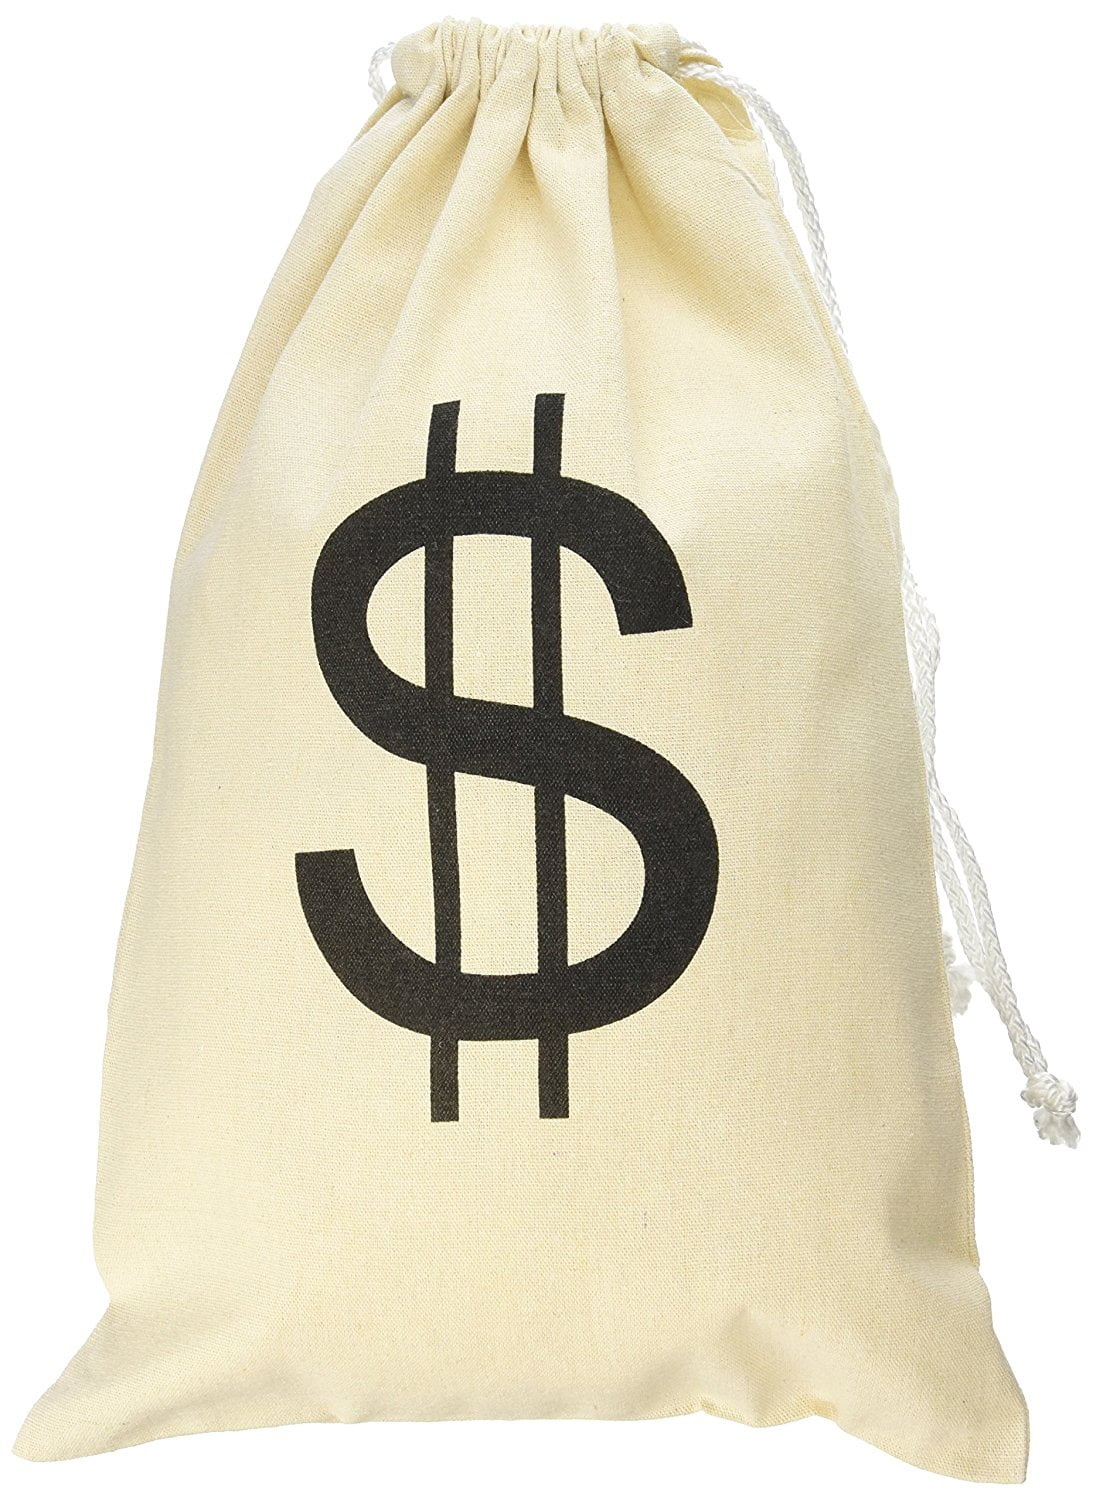 PAUBOLI Dollar Sign $ Money Bag 8 x 10 Inches Canvas Drawstring Bag Bank Robber Bag Bag 3pcs/Pkg 